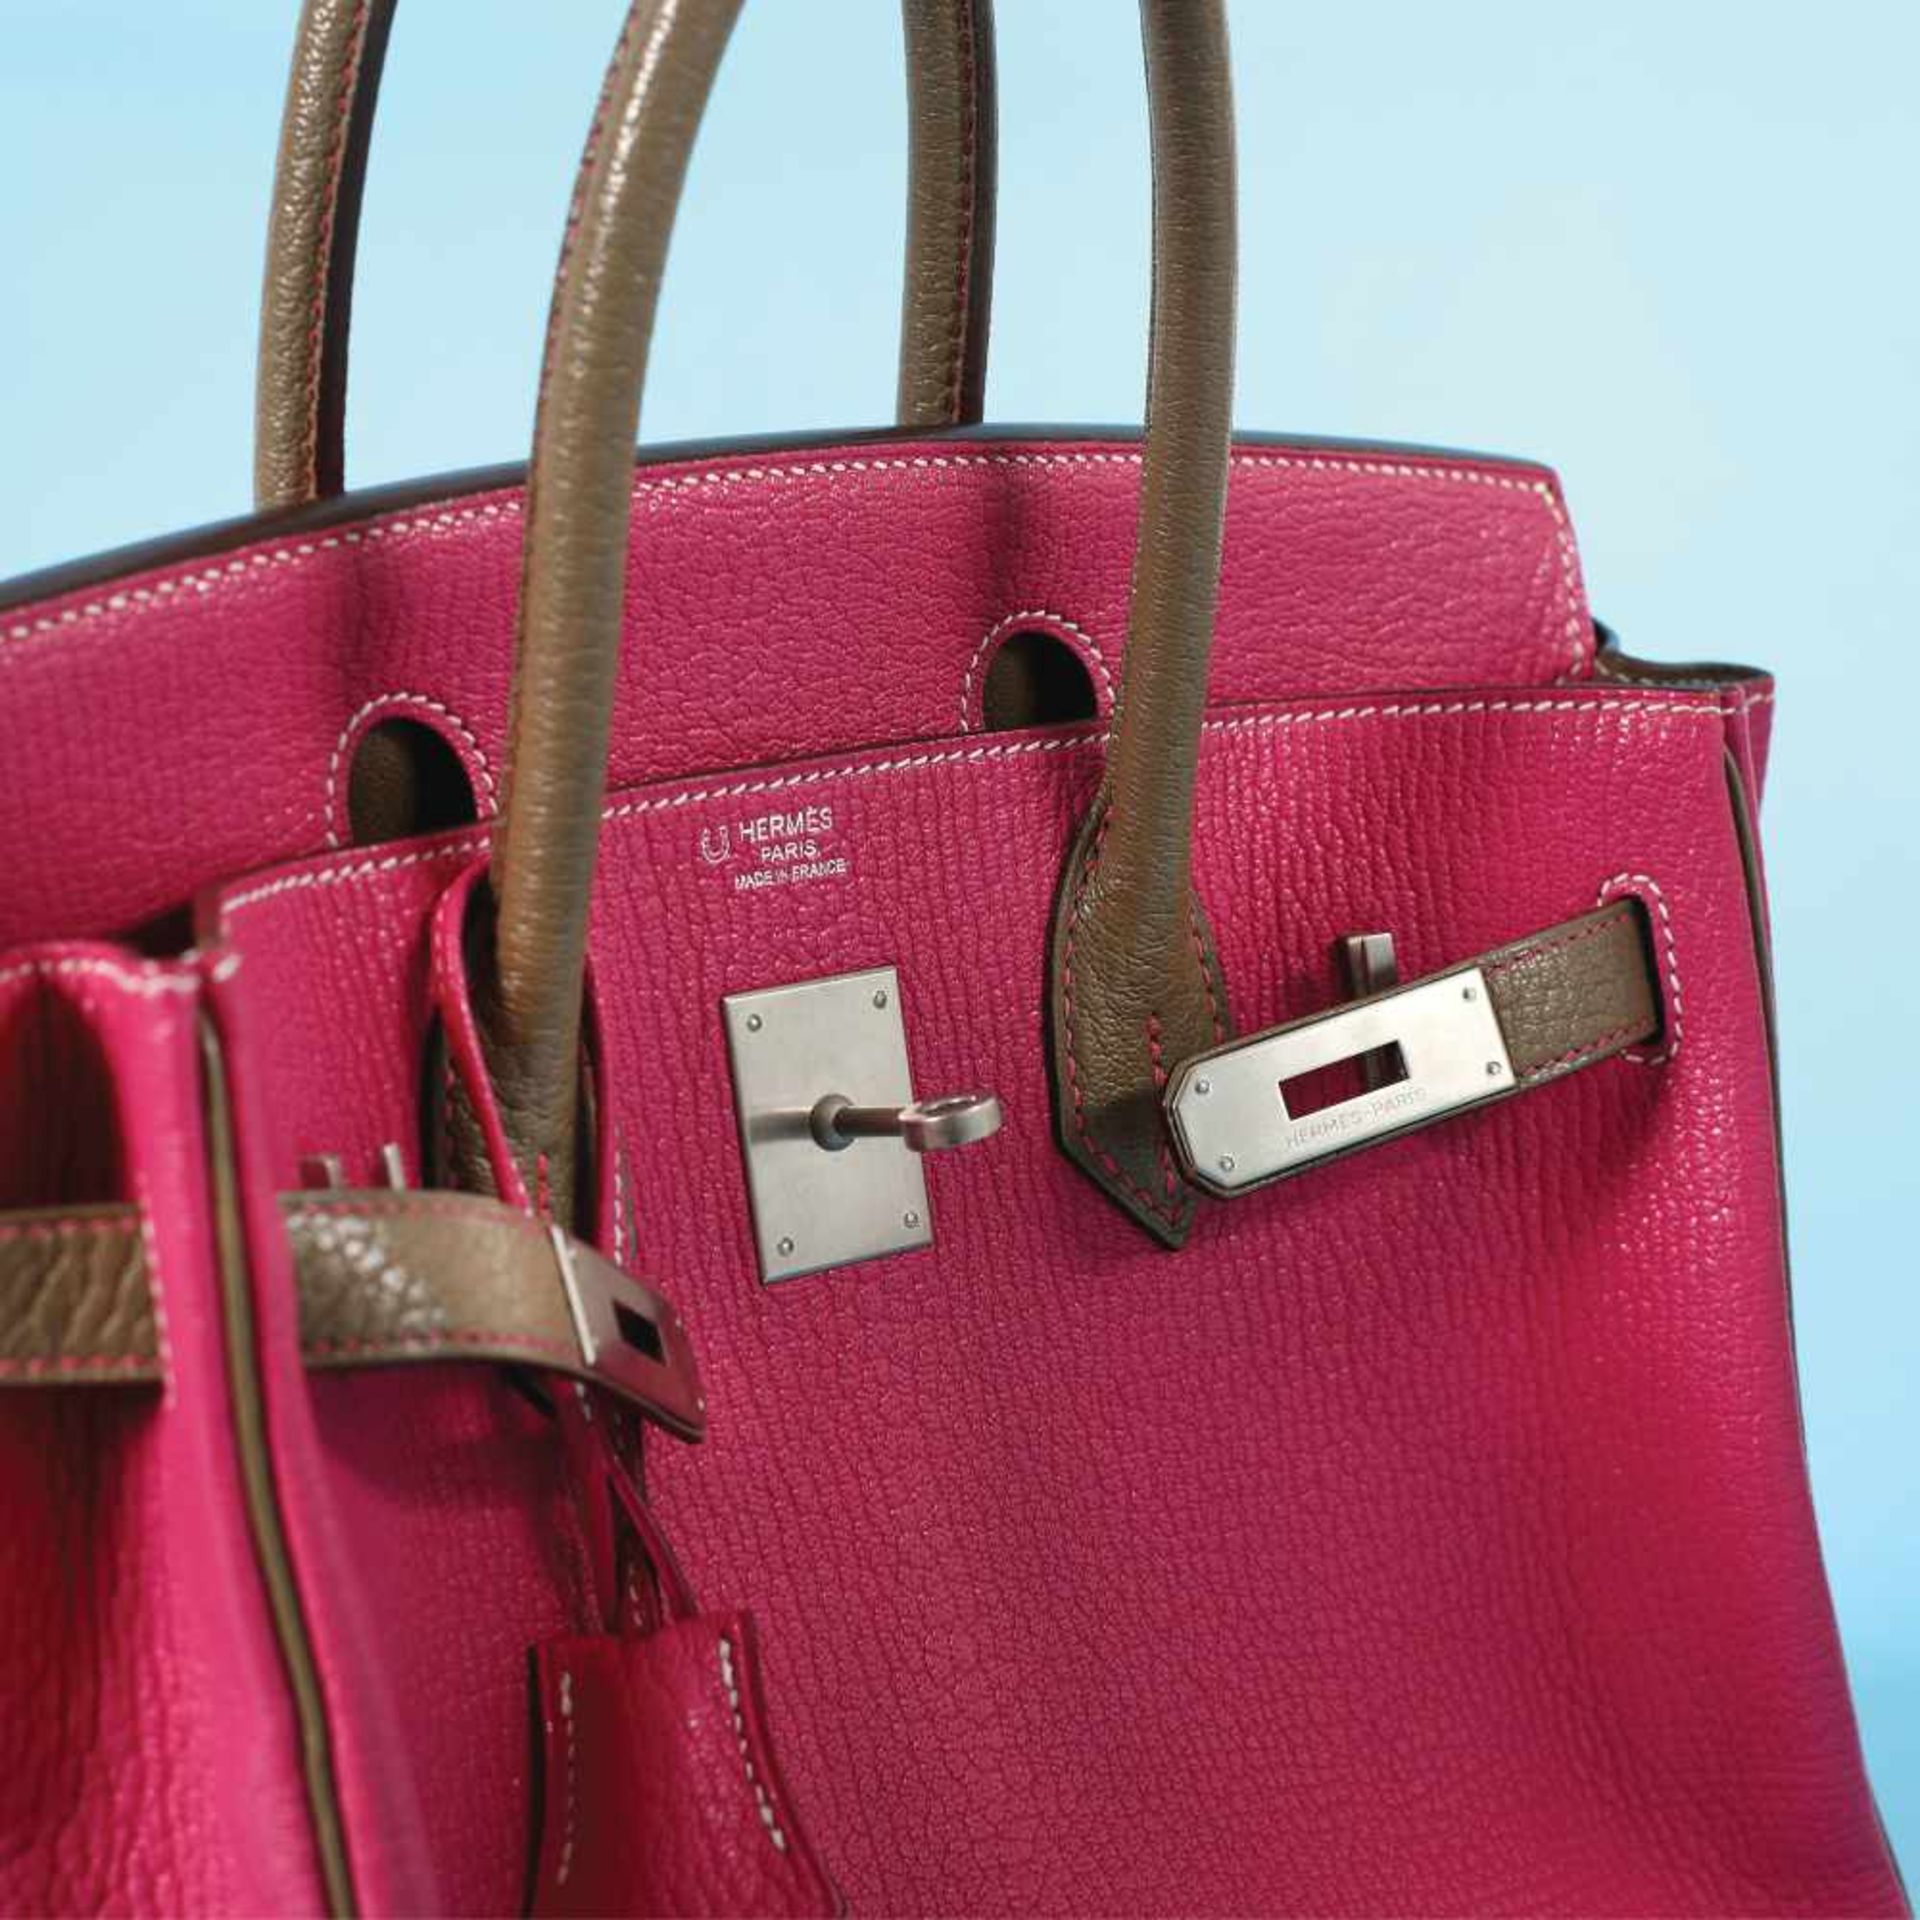 "Birkin 30" - Hermès special order bag, Chèvre leather, colour Rose Pourpre, for women, limited ed - Image 4 of 6